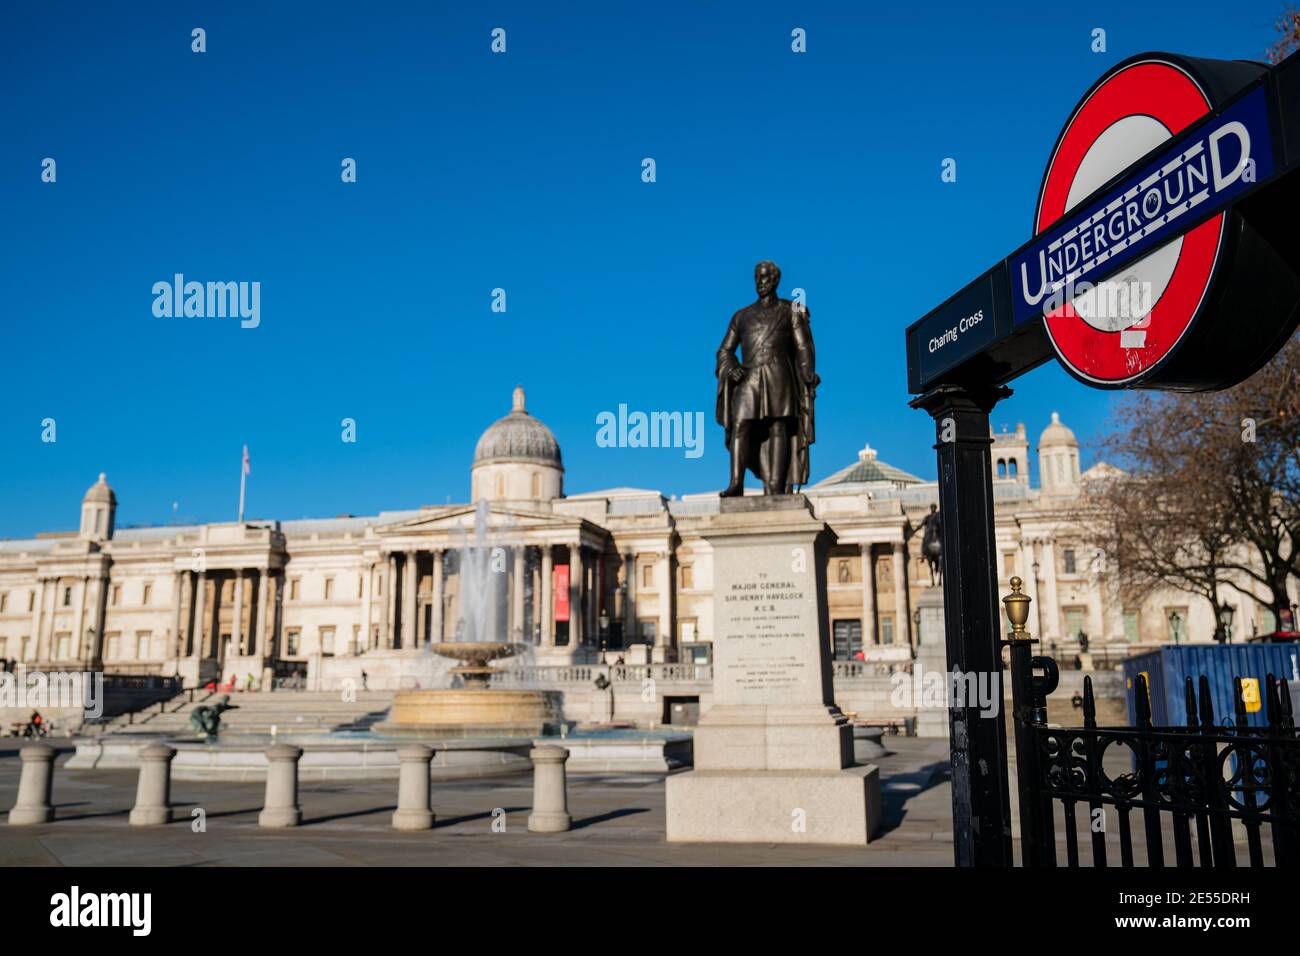 London Underground sign outside the National Gallery at Trafalgar Square,  London, UK Stock Photo - Alamy